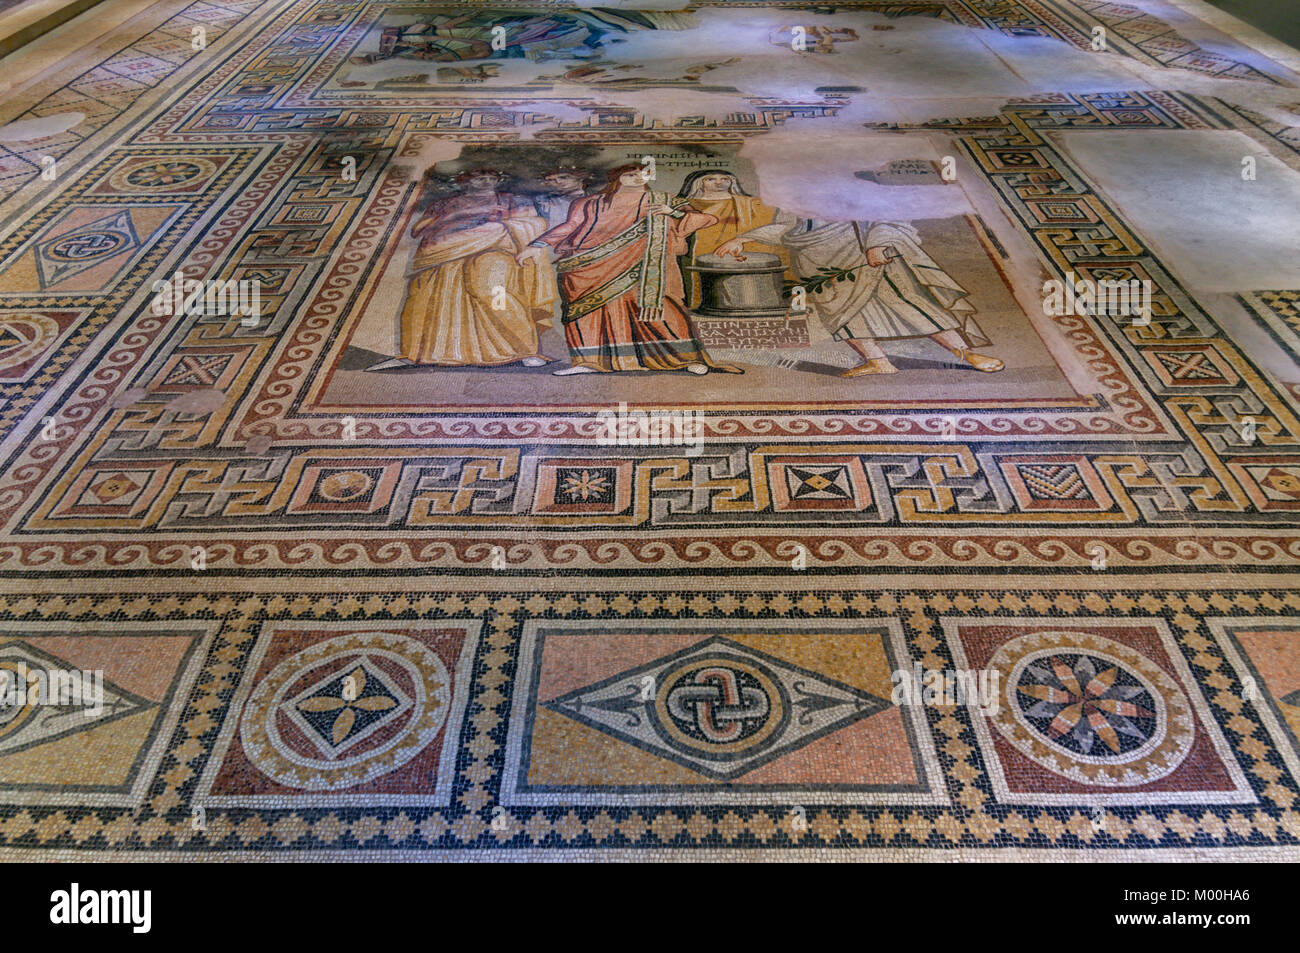 Floor mosaic from Zeugma, Gaziantep Zeugma Mosaic Museum, Gaziantep, Southeastern Anatolia Region of Turkey Stock Photo